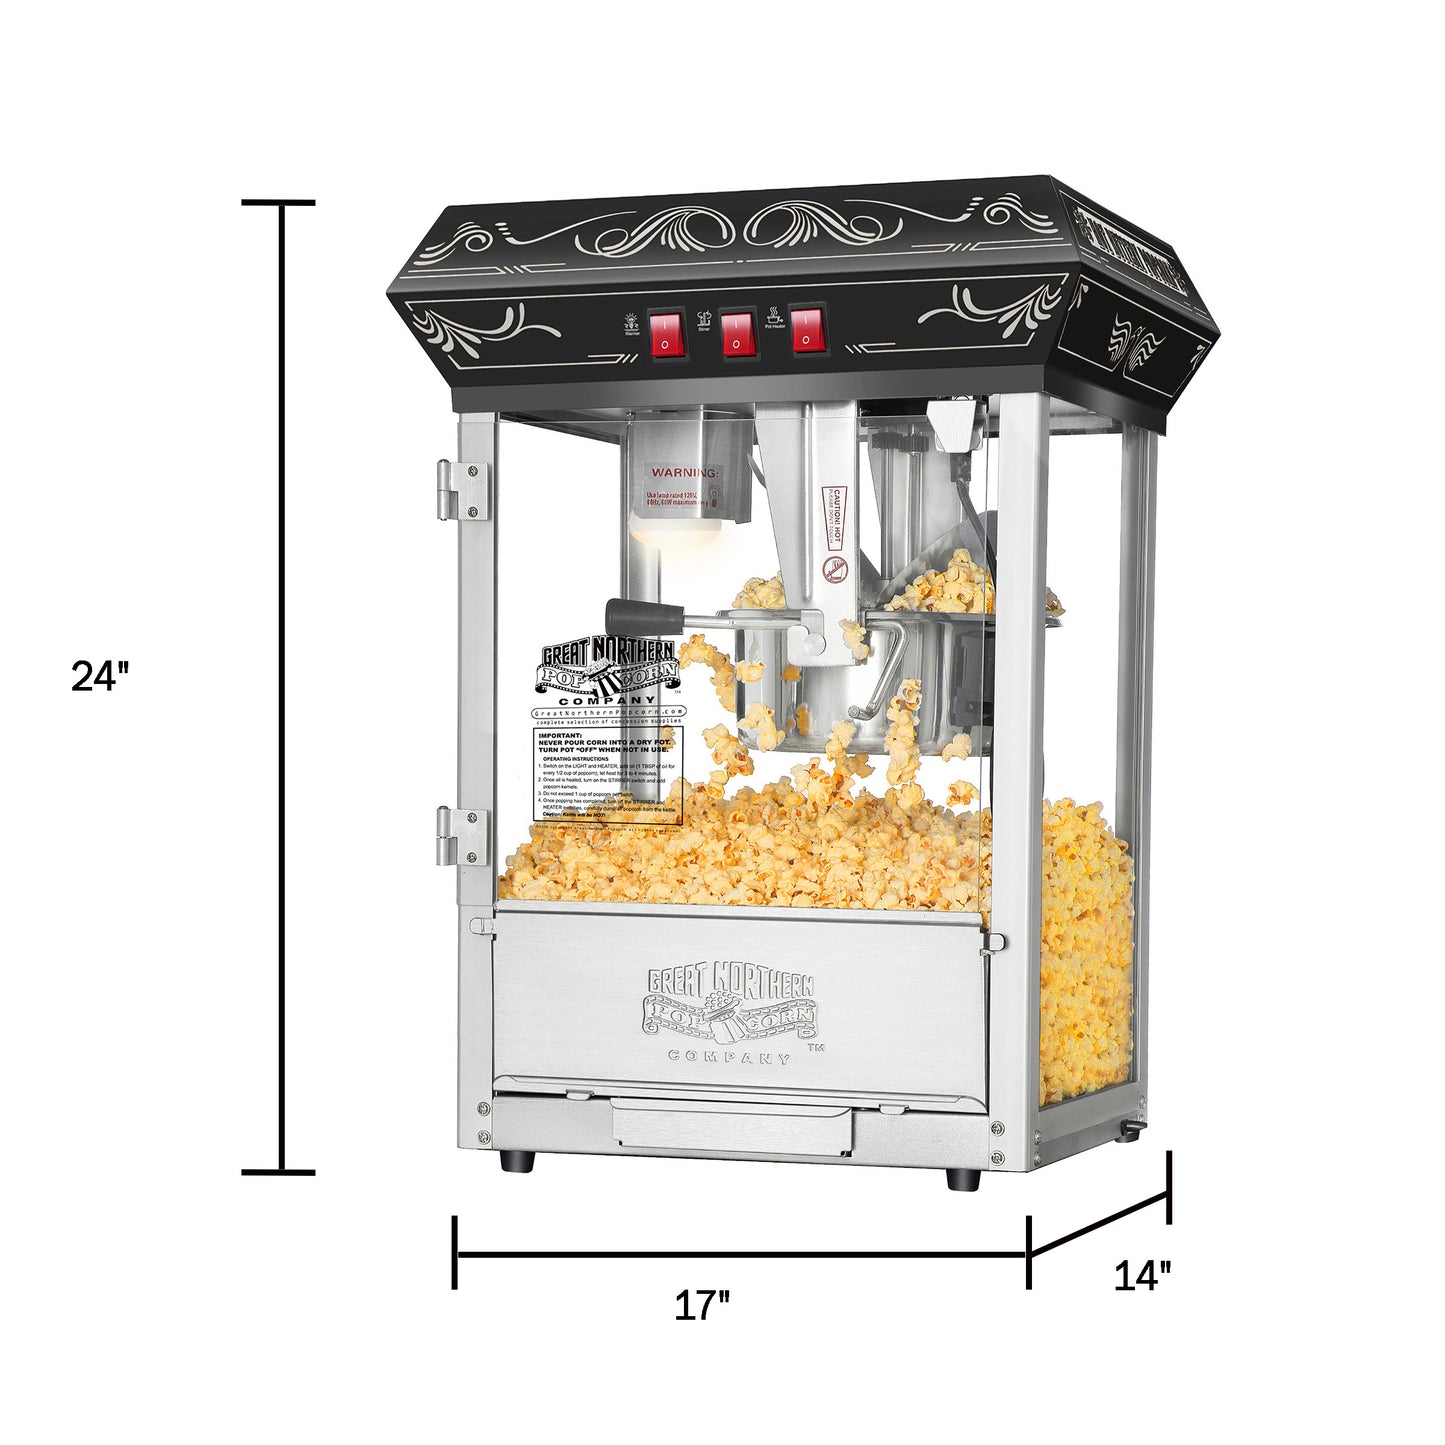 Great Northern Popcorn 8-oz Popcorn at